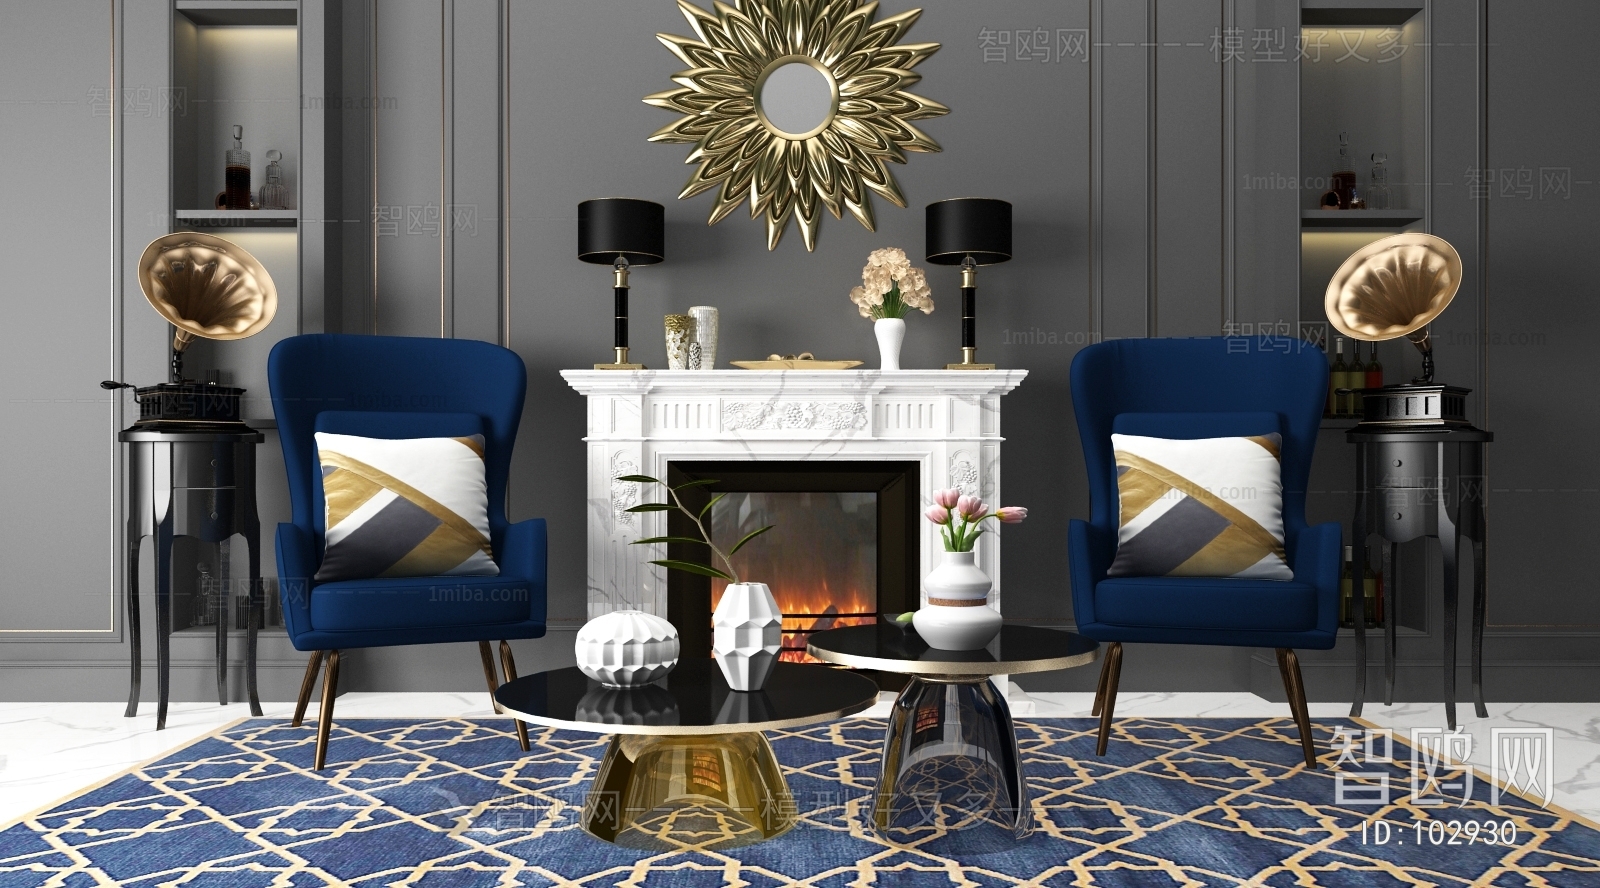 Post Modern Style Fireplace